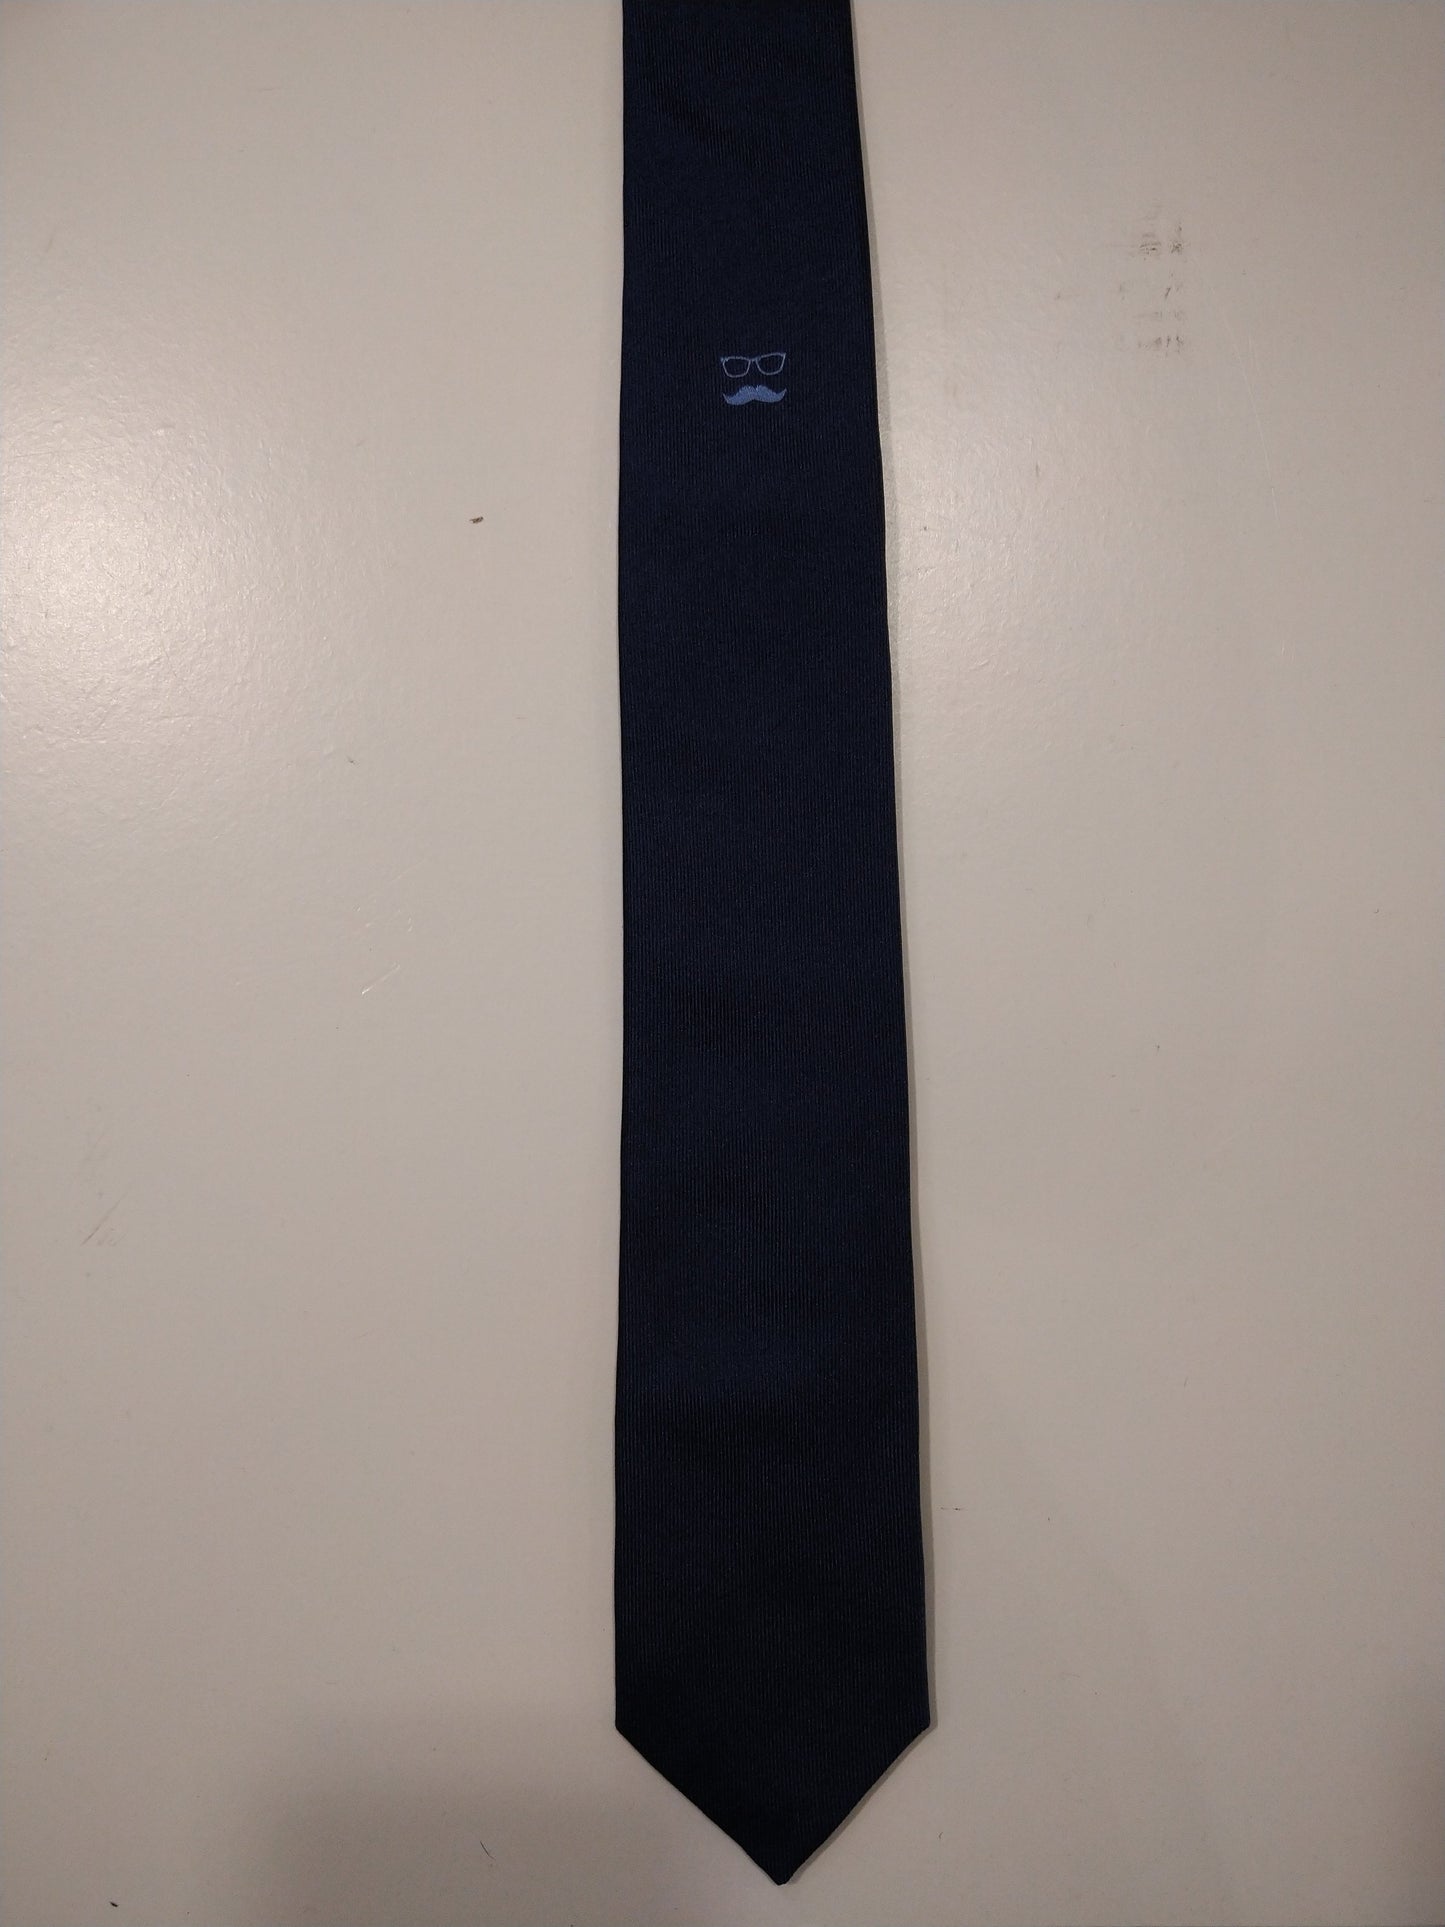 Sieben Zifferblätter London Seiden schmale Krawatte. Blau